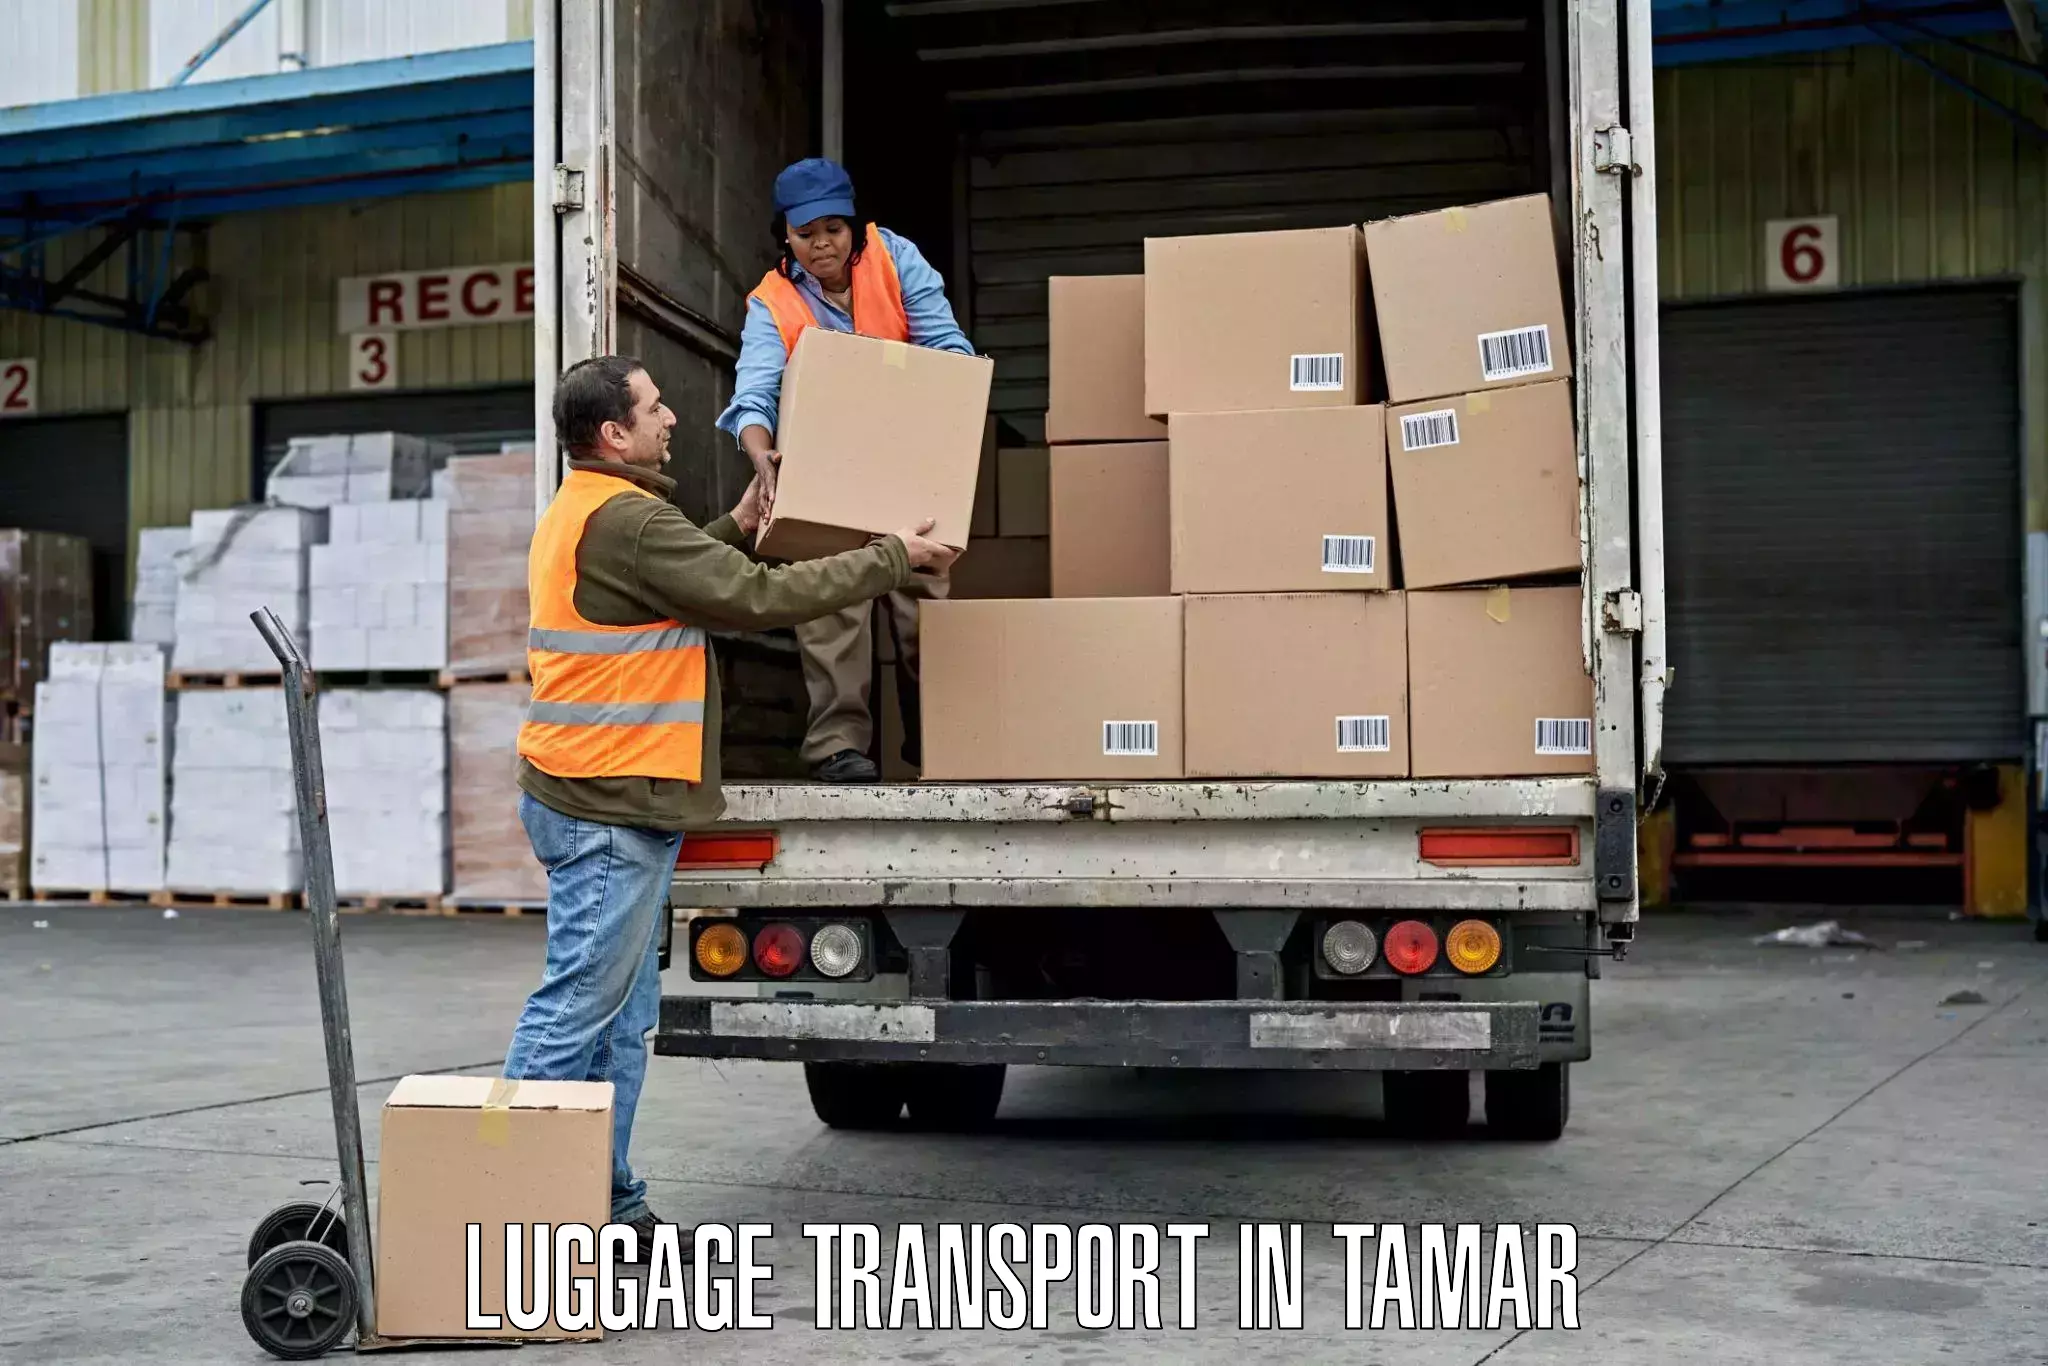 Baggage transport innovation in Tamar